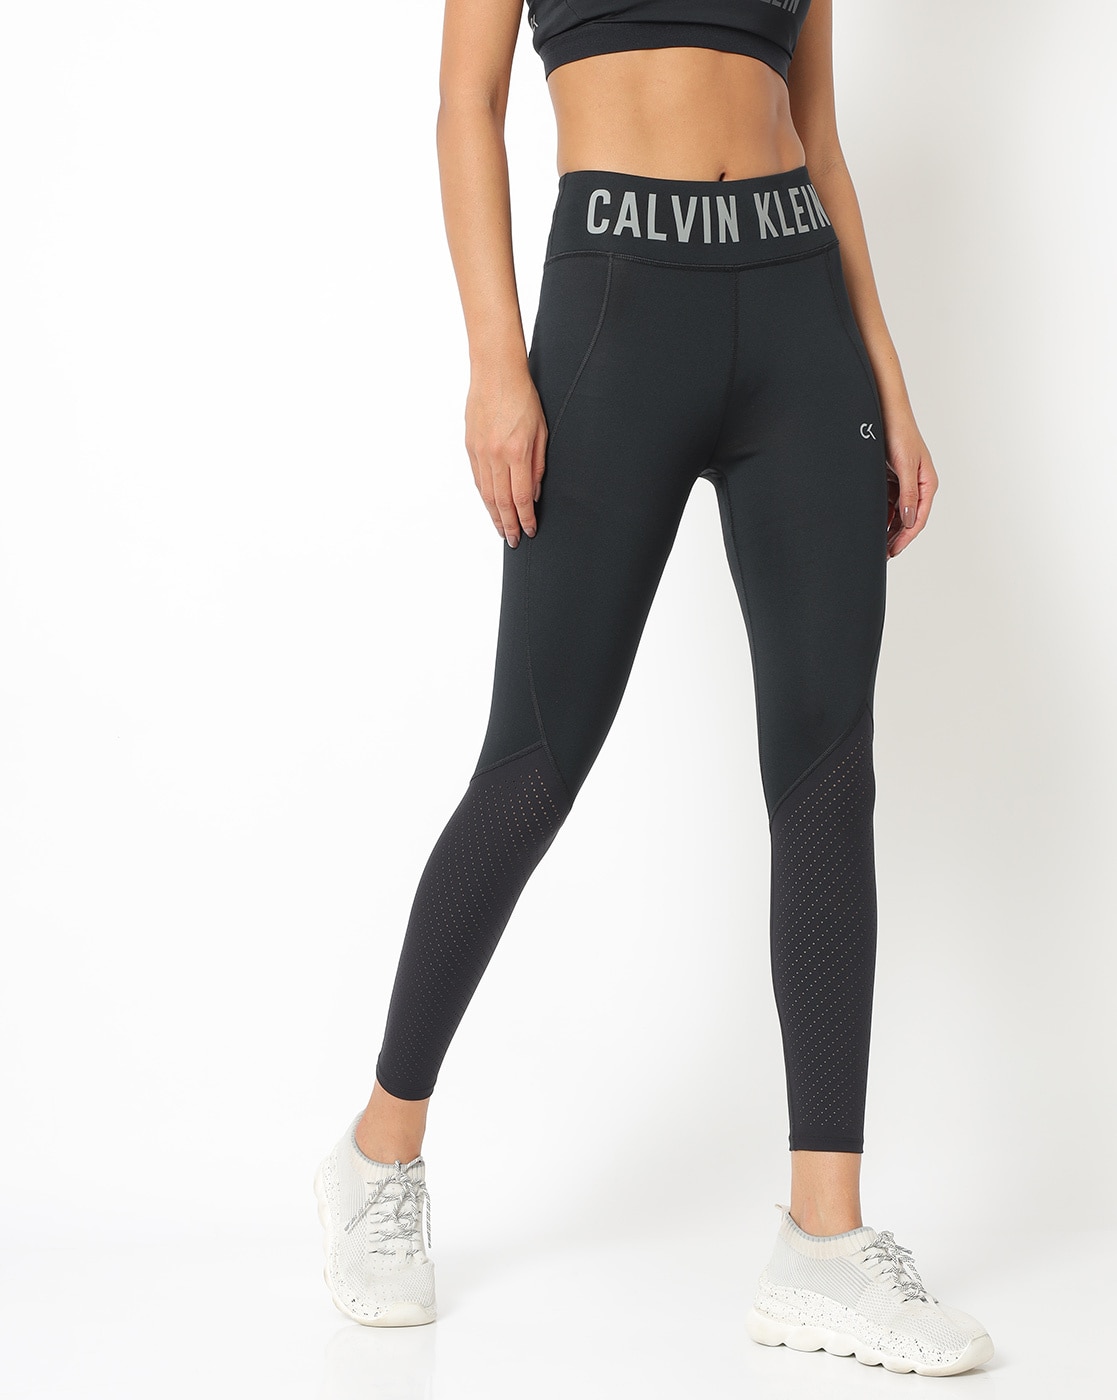 Buy Calvin Klein 7/8 Gym Leggings - Calvin Klein Sports Online